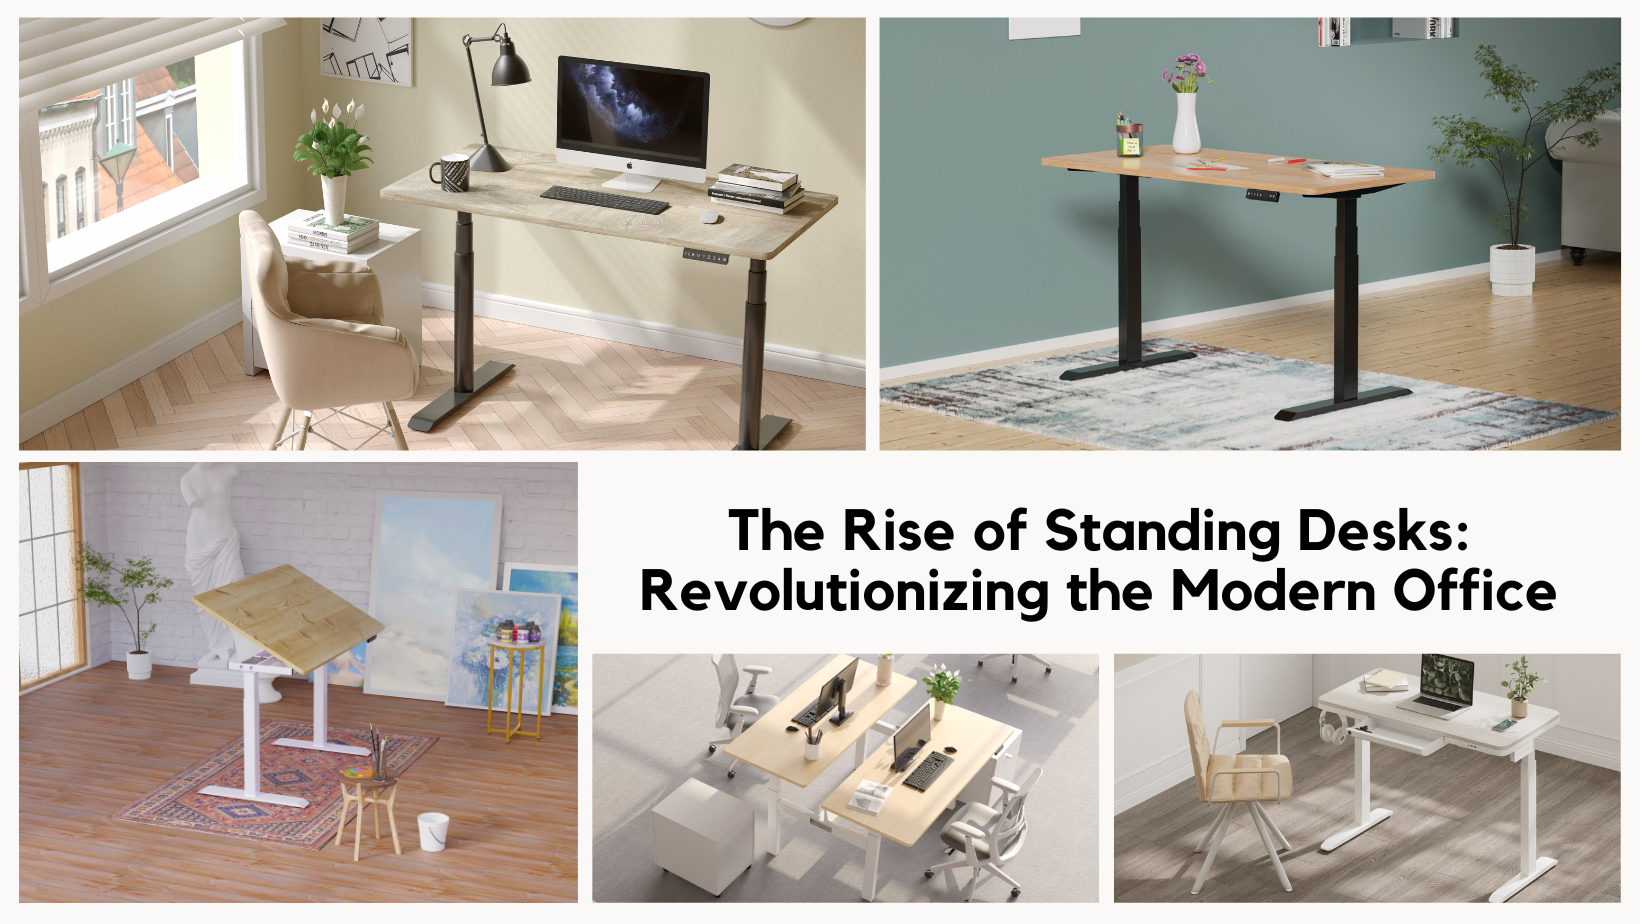 The Rise of Standing Desks: Revolutionizing the Modern Office